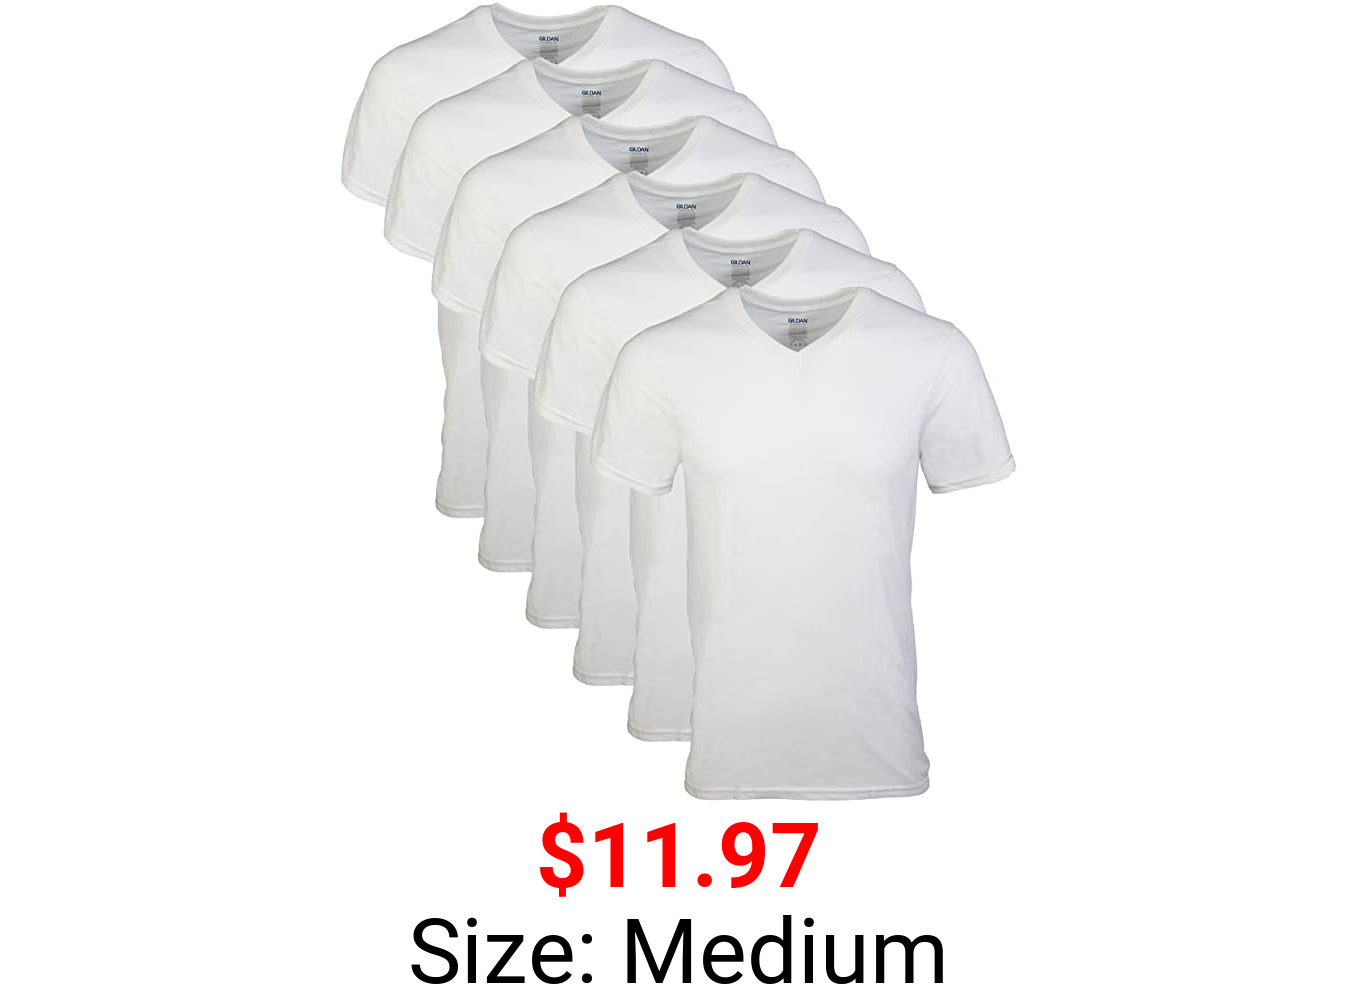 Gildan Men's V-Neck T-Shirts, Multipack